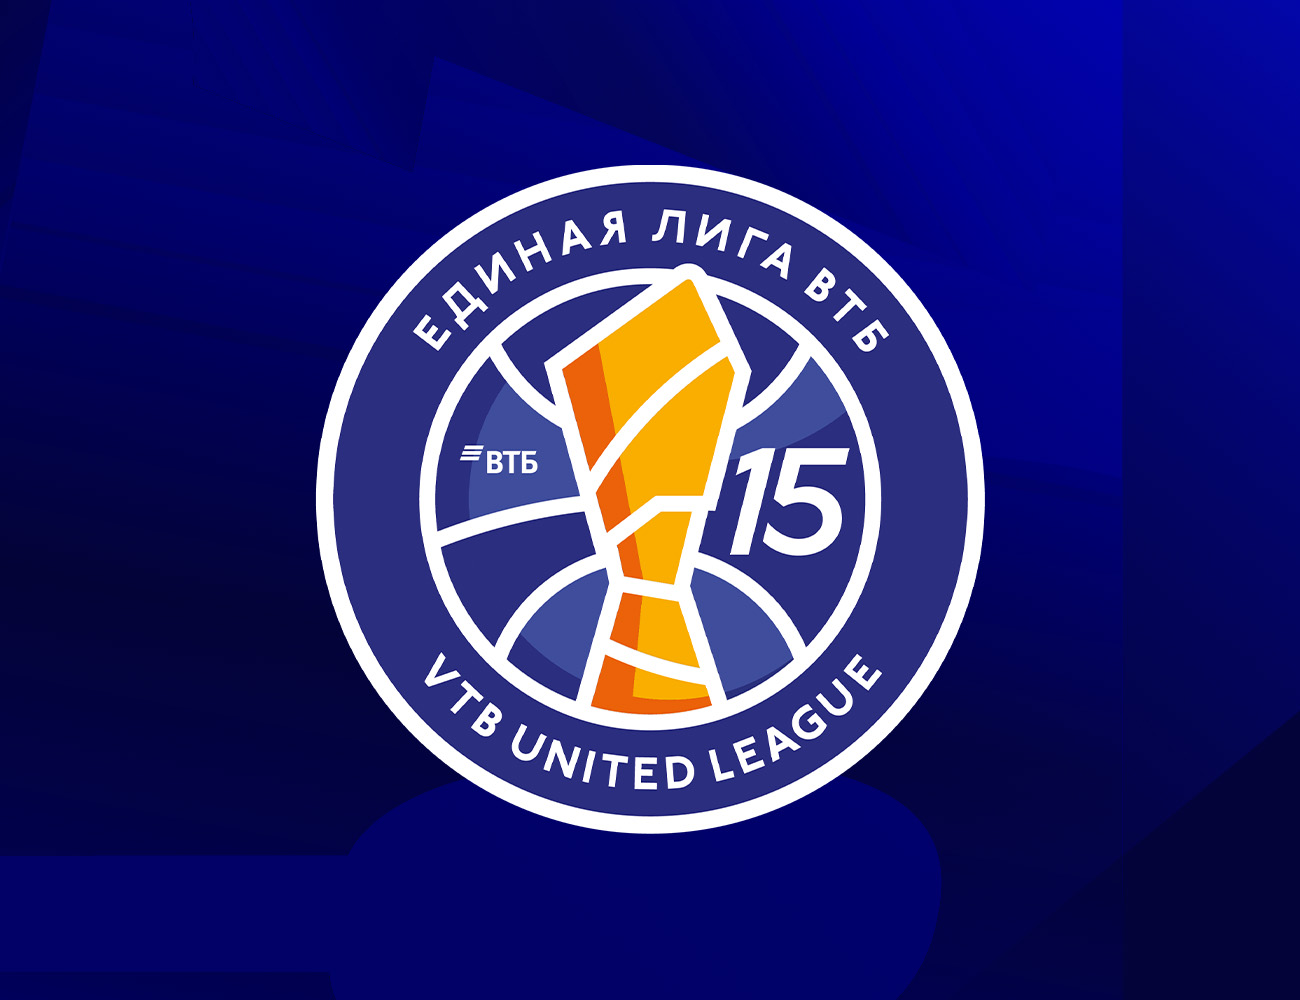 The League Directorate on Okaro White suspension and Lokomotiv Kuban fining